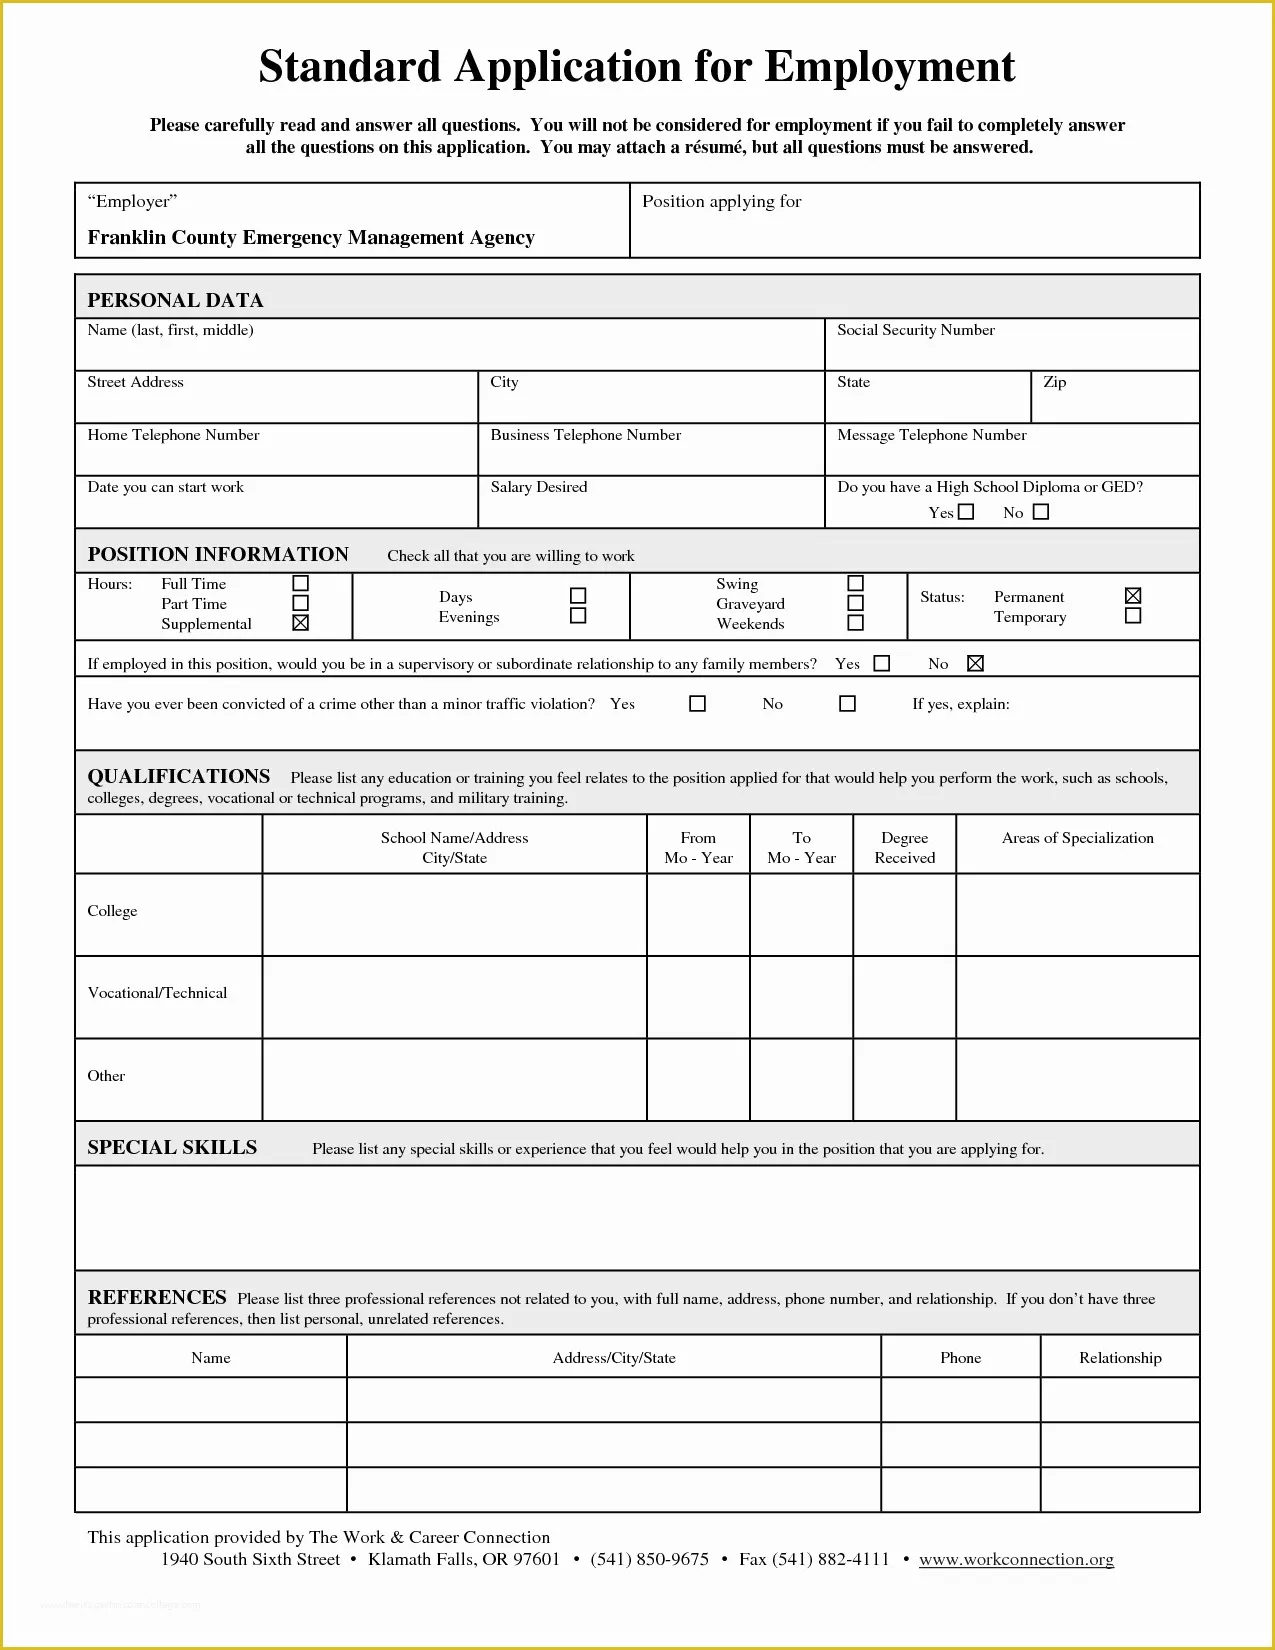 Free Employment Application Template Of Standard Job Application form